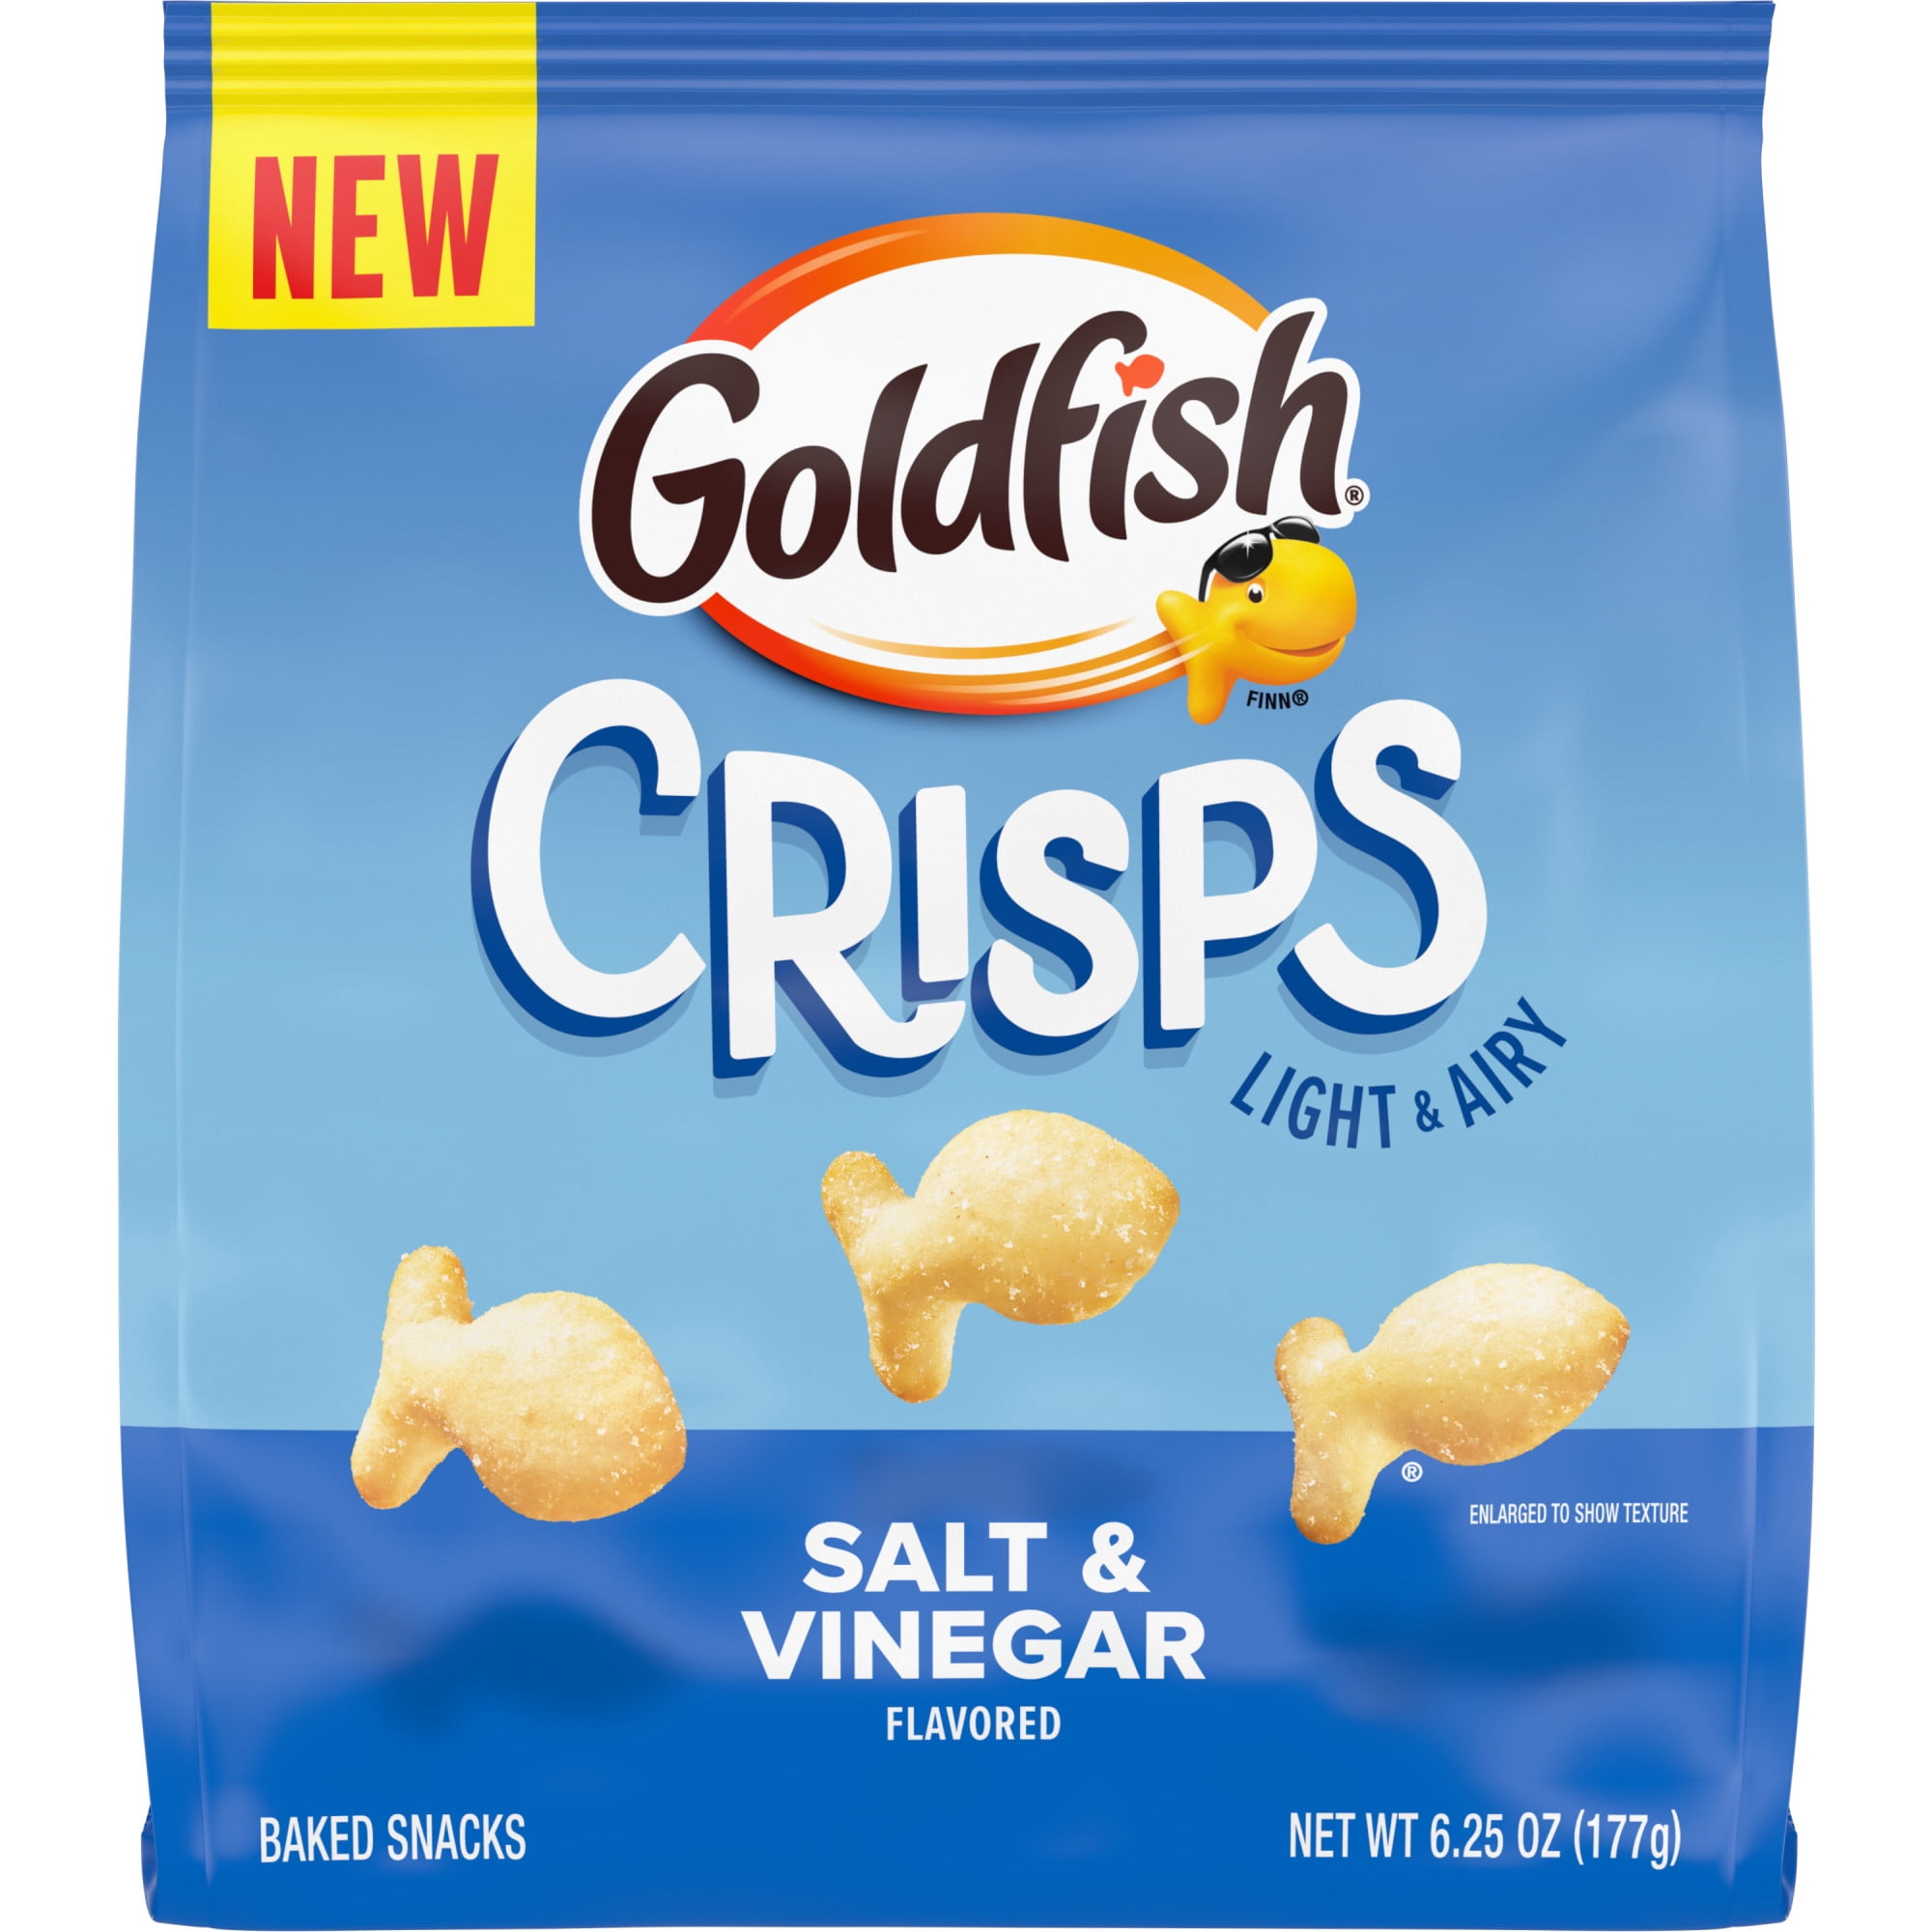 Goldfish-Crisps-Salt-Vinegar-Flavored-6-25oz-Bag_6e2a37dc-af7f-4224-8138-cc51a387759c.cac71e6cf86fd9607714e39cacf79f44.jpeg